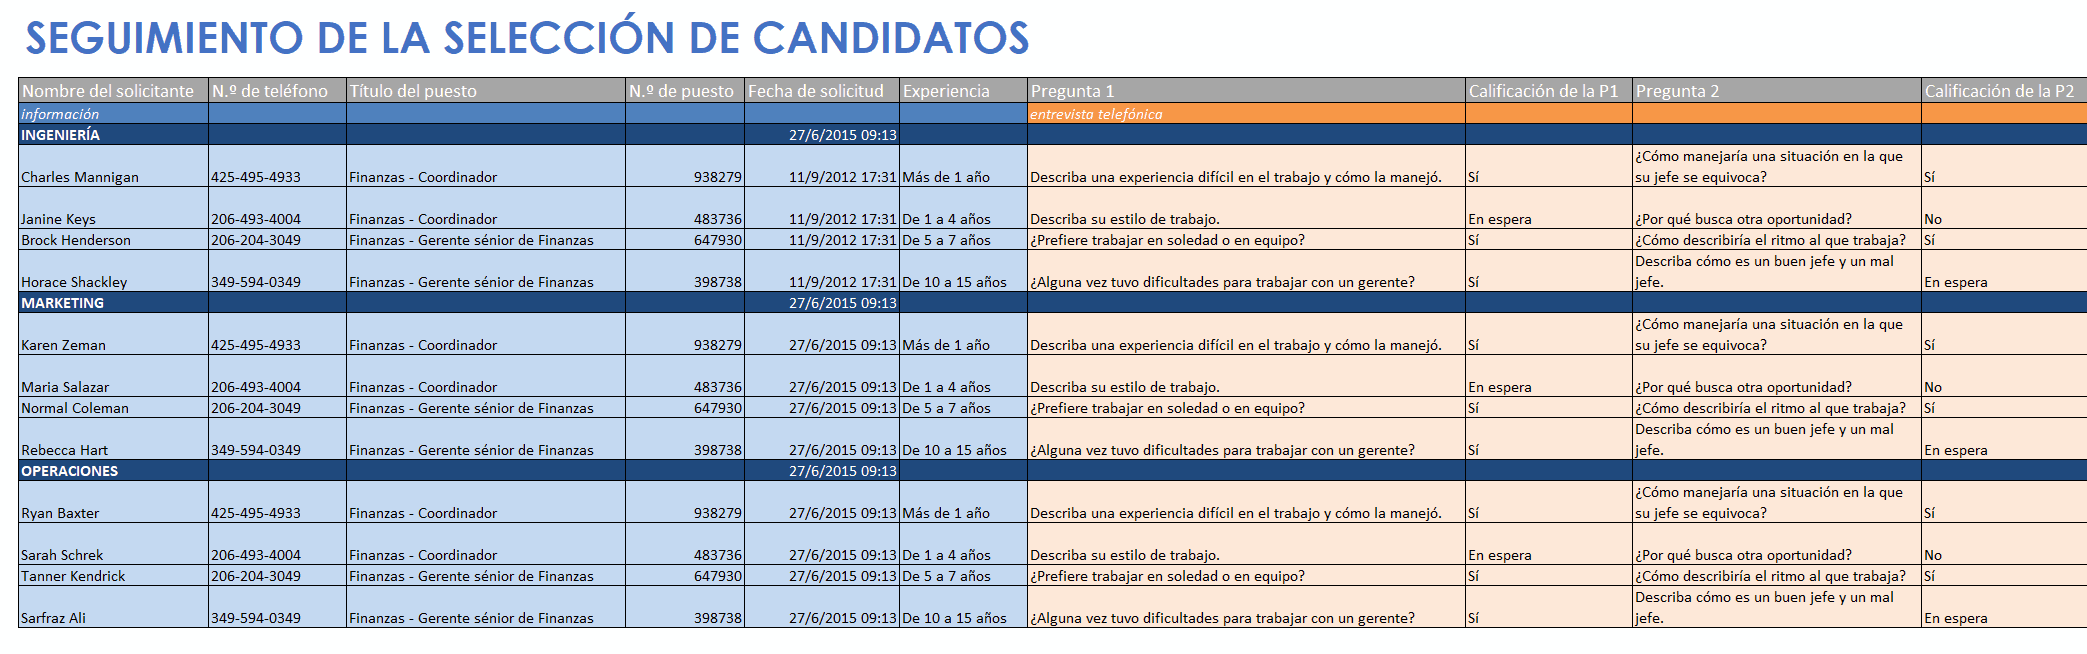 Seguimiento de pantalla de candidatos